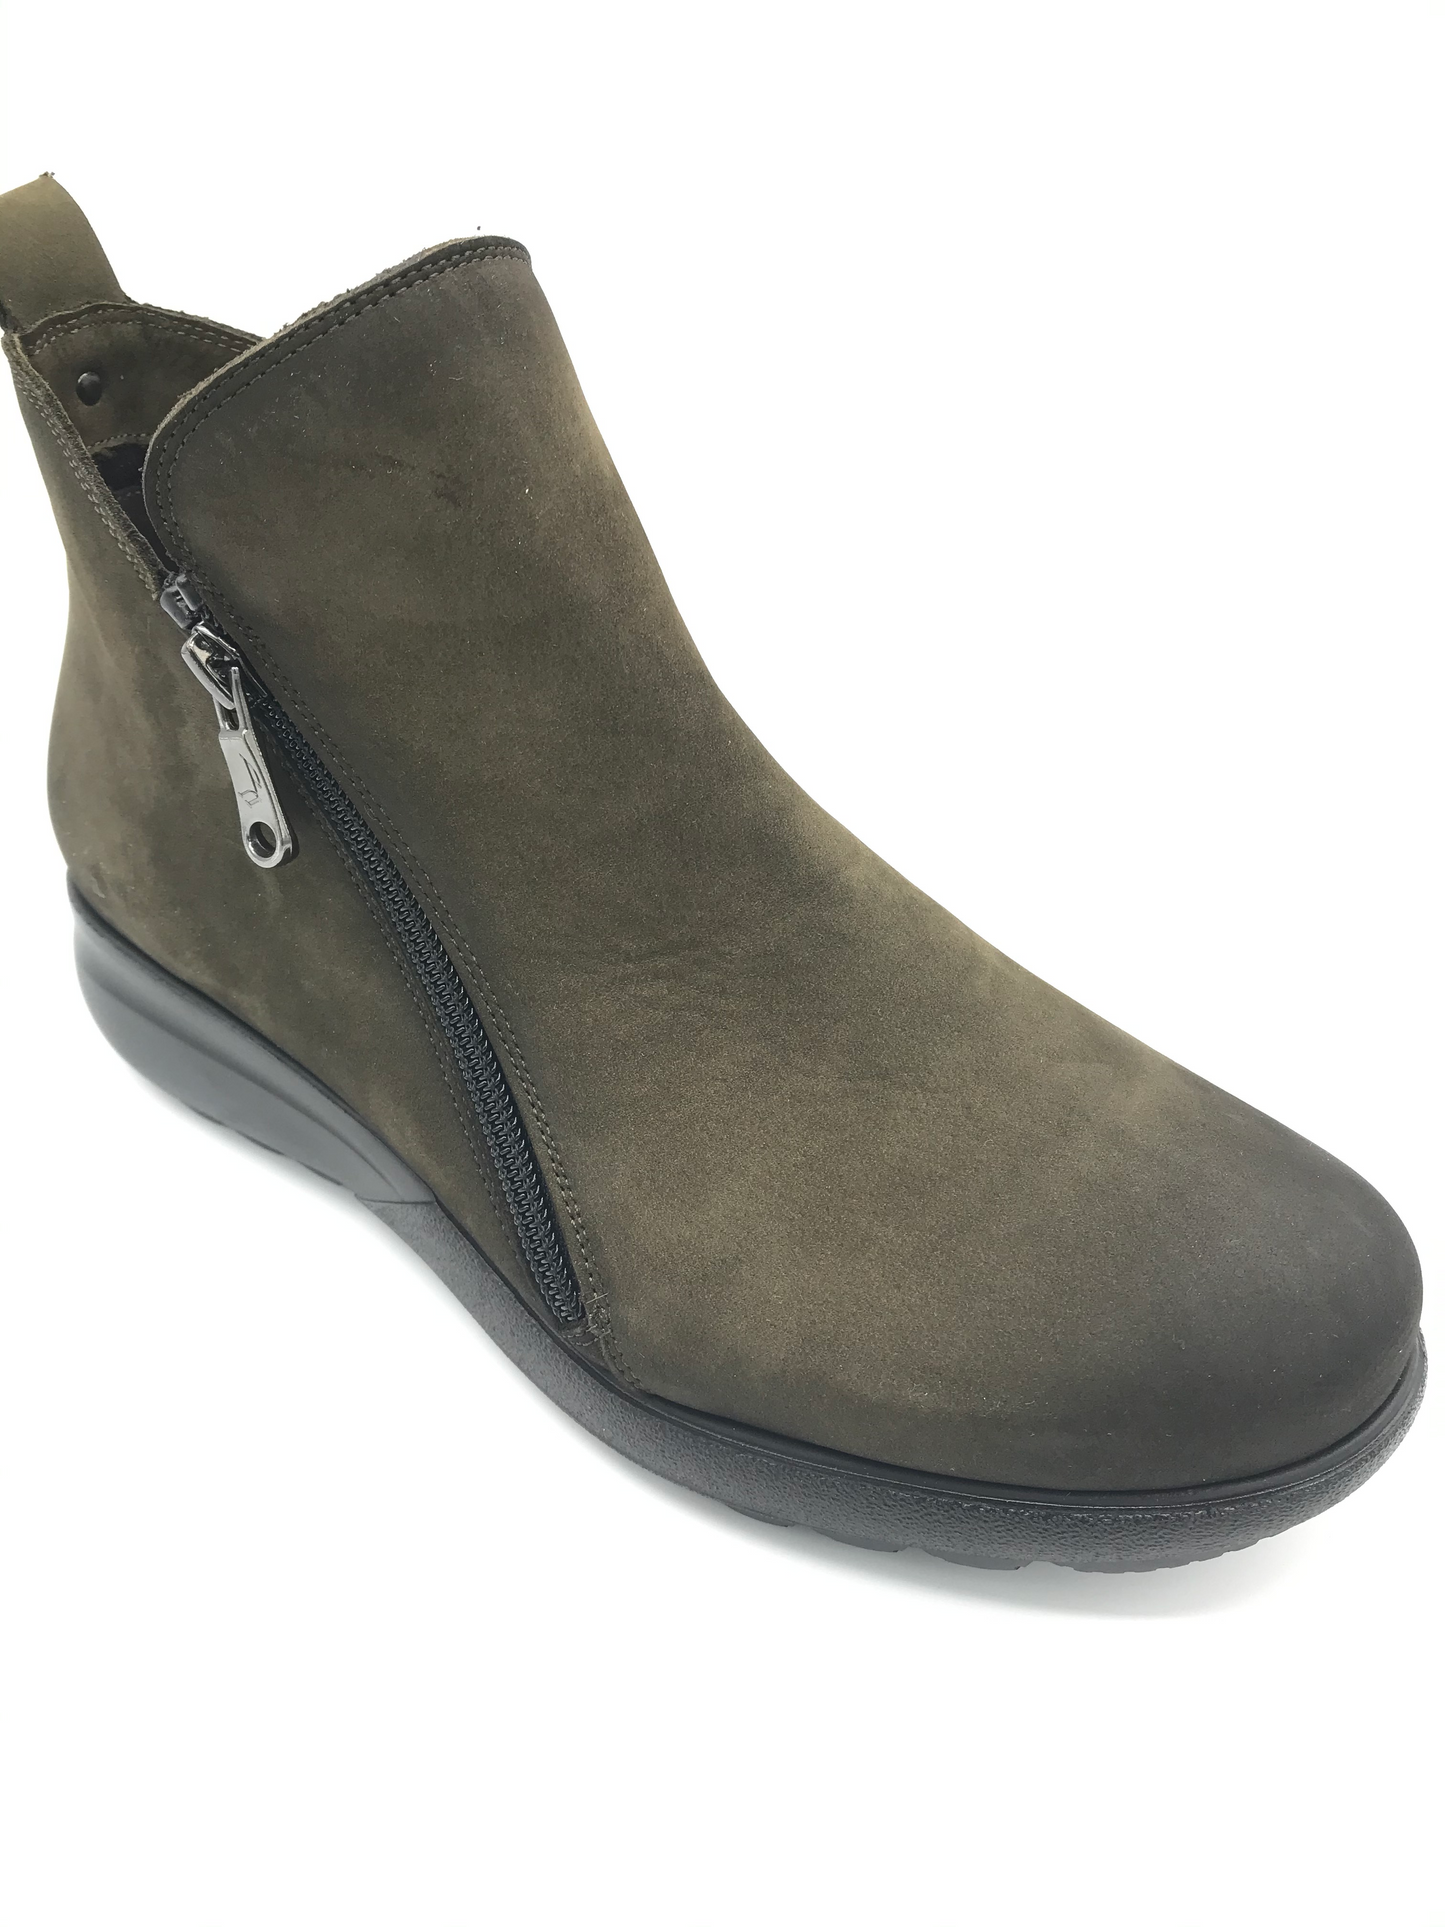 Paula Urban 3-1067 twin zipped Khaki ankle boot - Imeldas Shoes Norwich